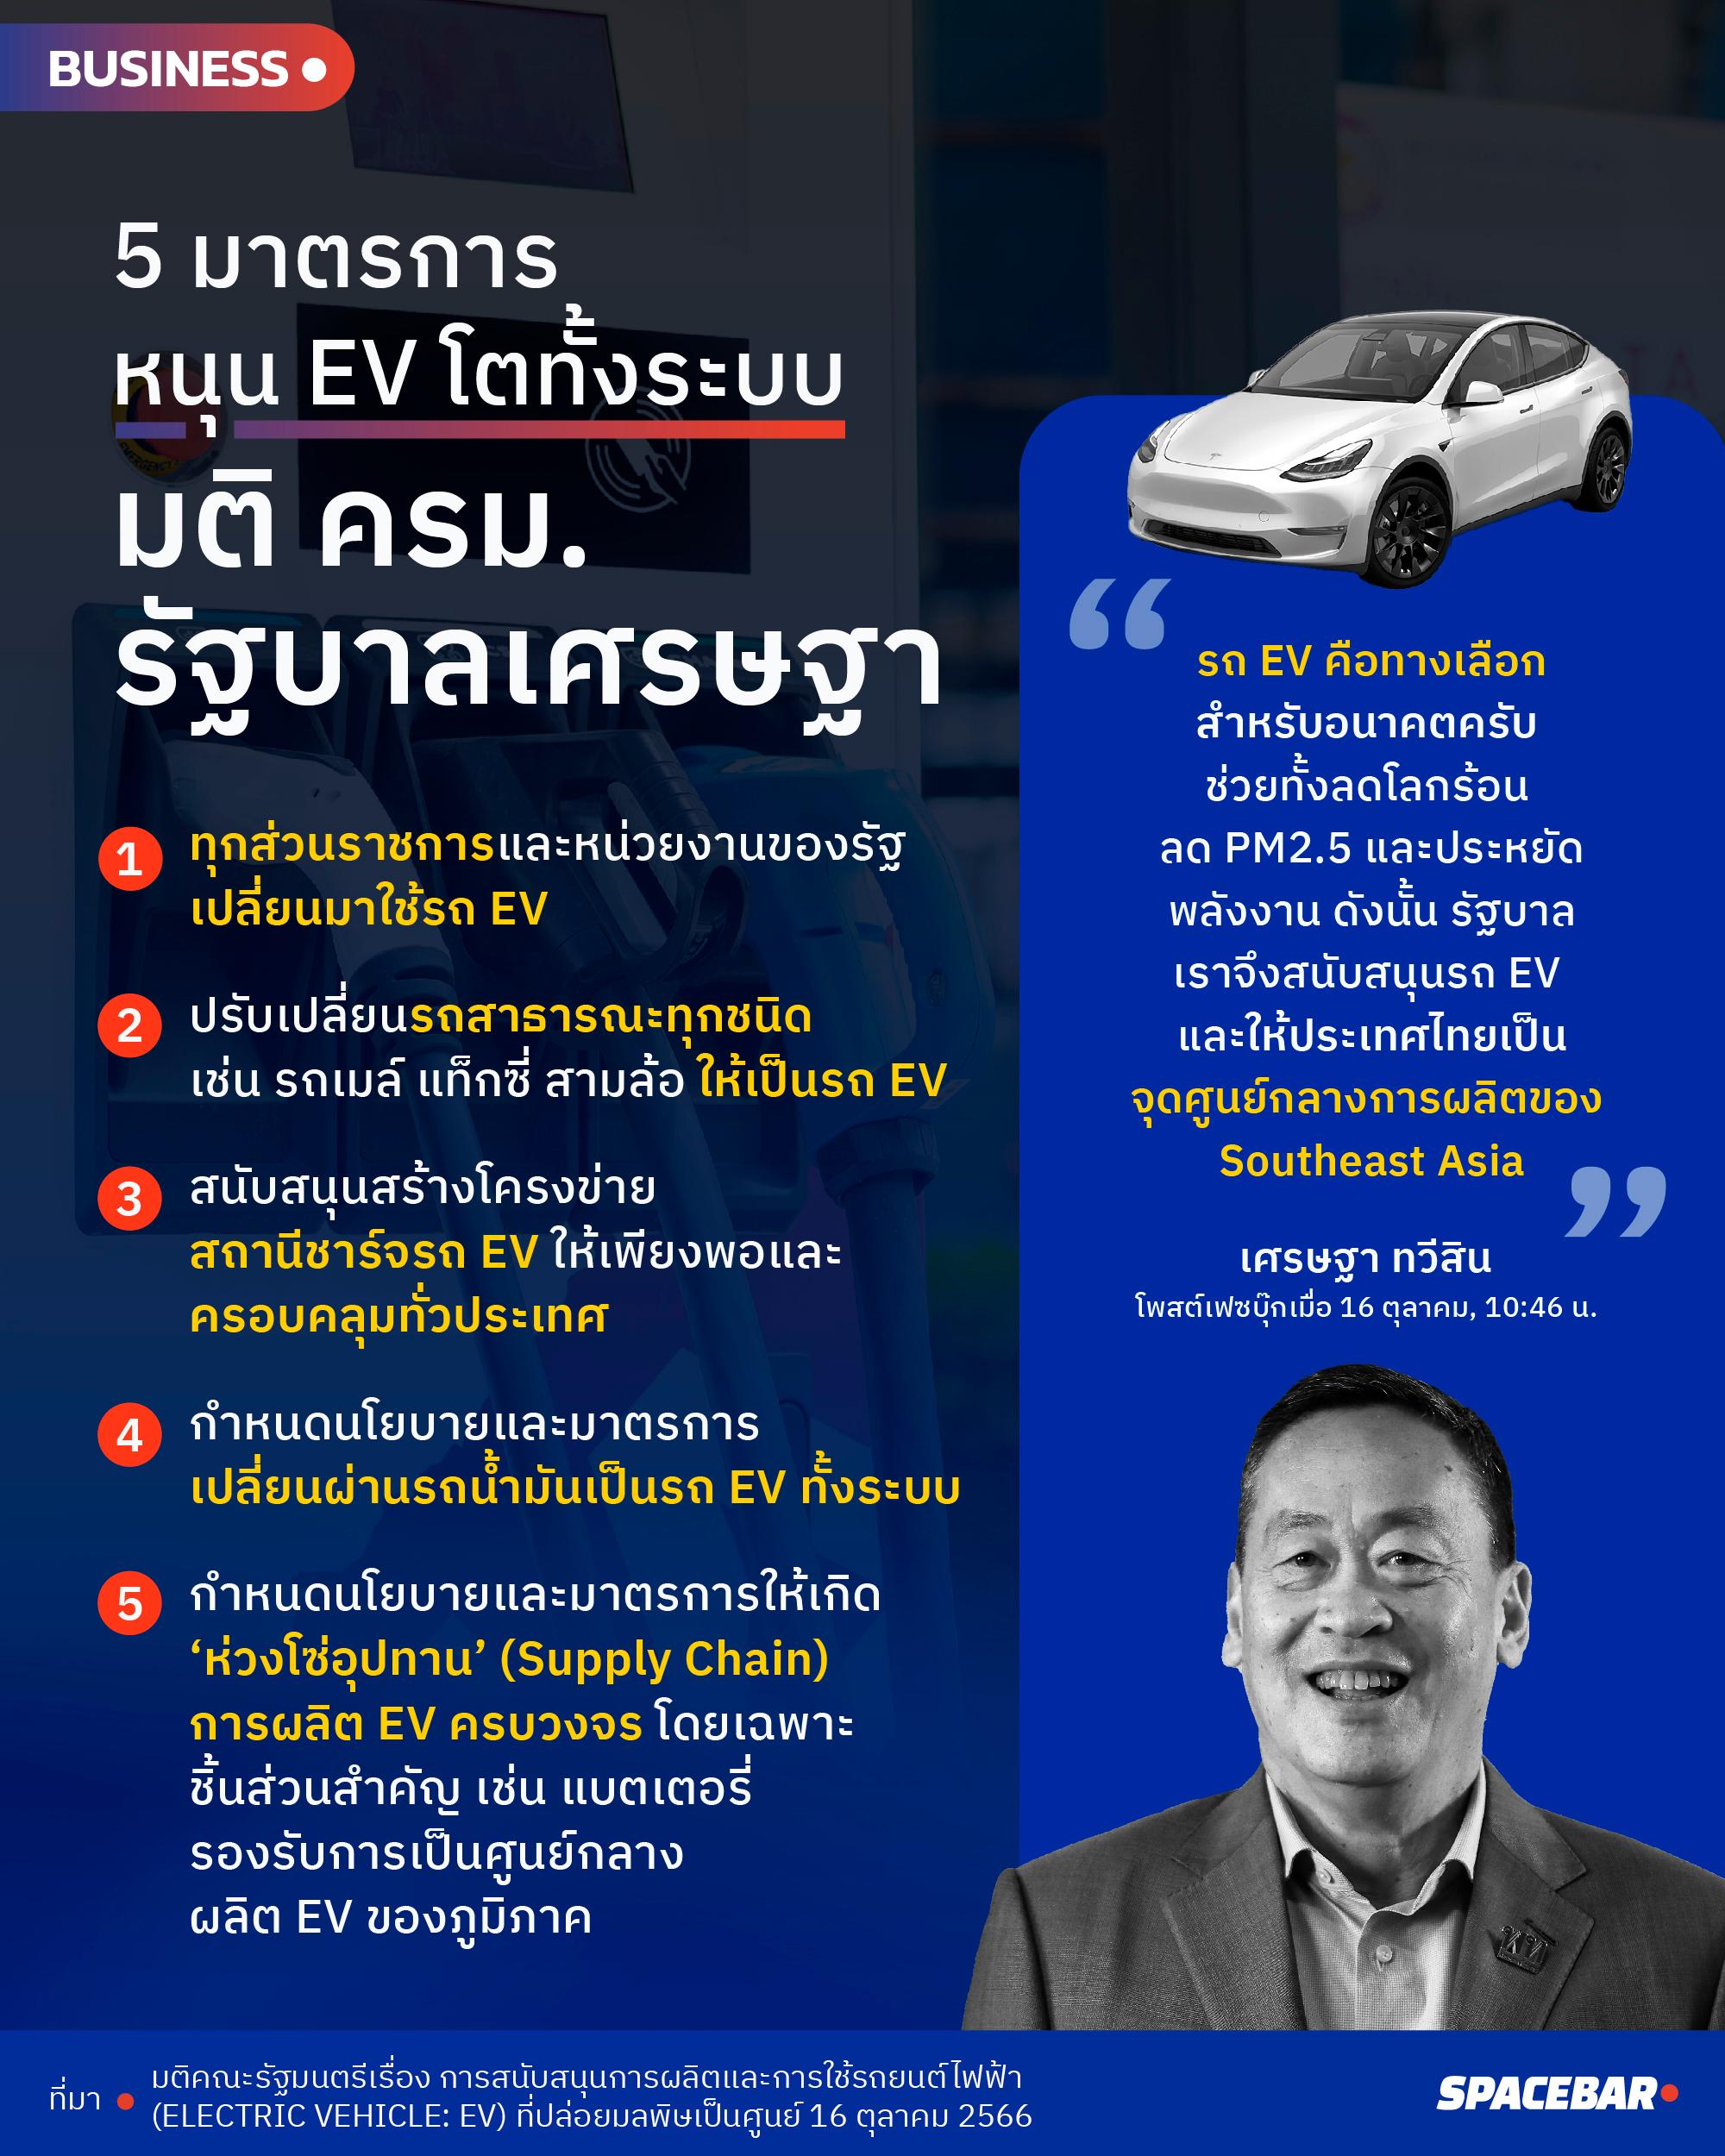 EV, รถยนต์ไฟฟ้า, รถ EV, อีวี, ประเทศไทย, Tesla, เทสล่า, เศรษฐา ทวีสิน, นายกรัฐมนตรี, มติคณะรัฐมนตรี, มาตรการ, สนับสนุน, อนาคต, จูงใจ, รัฐบาล